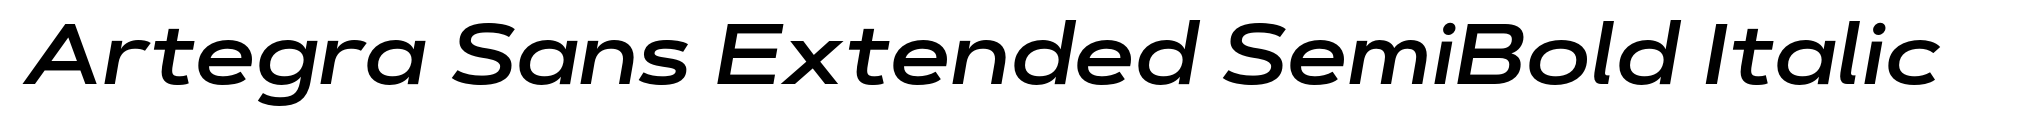 Artegra Sans Extended SemiBold Italic image